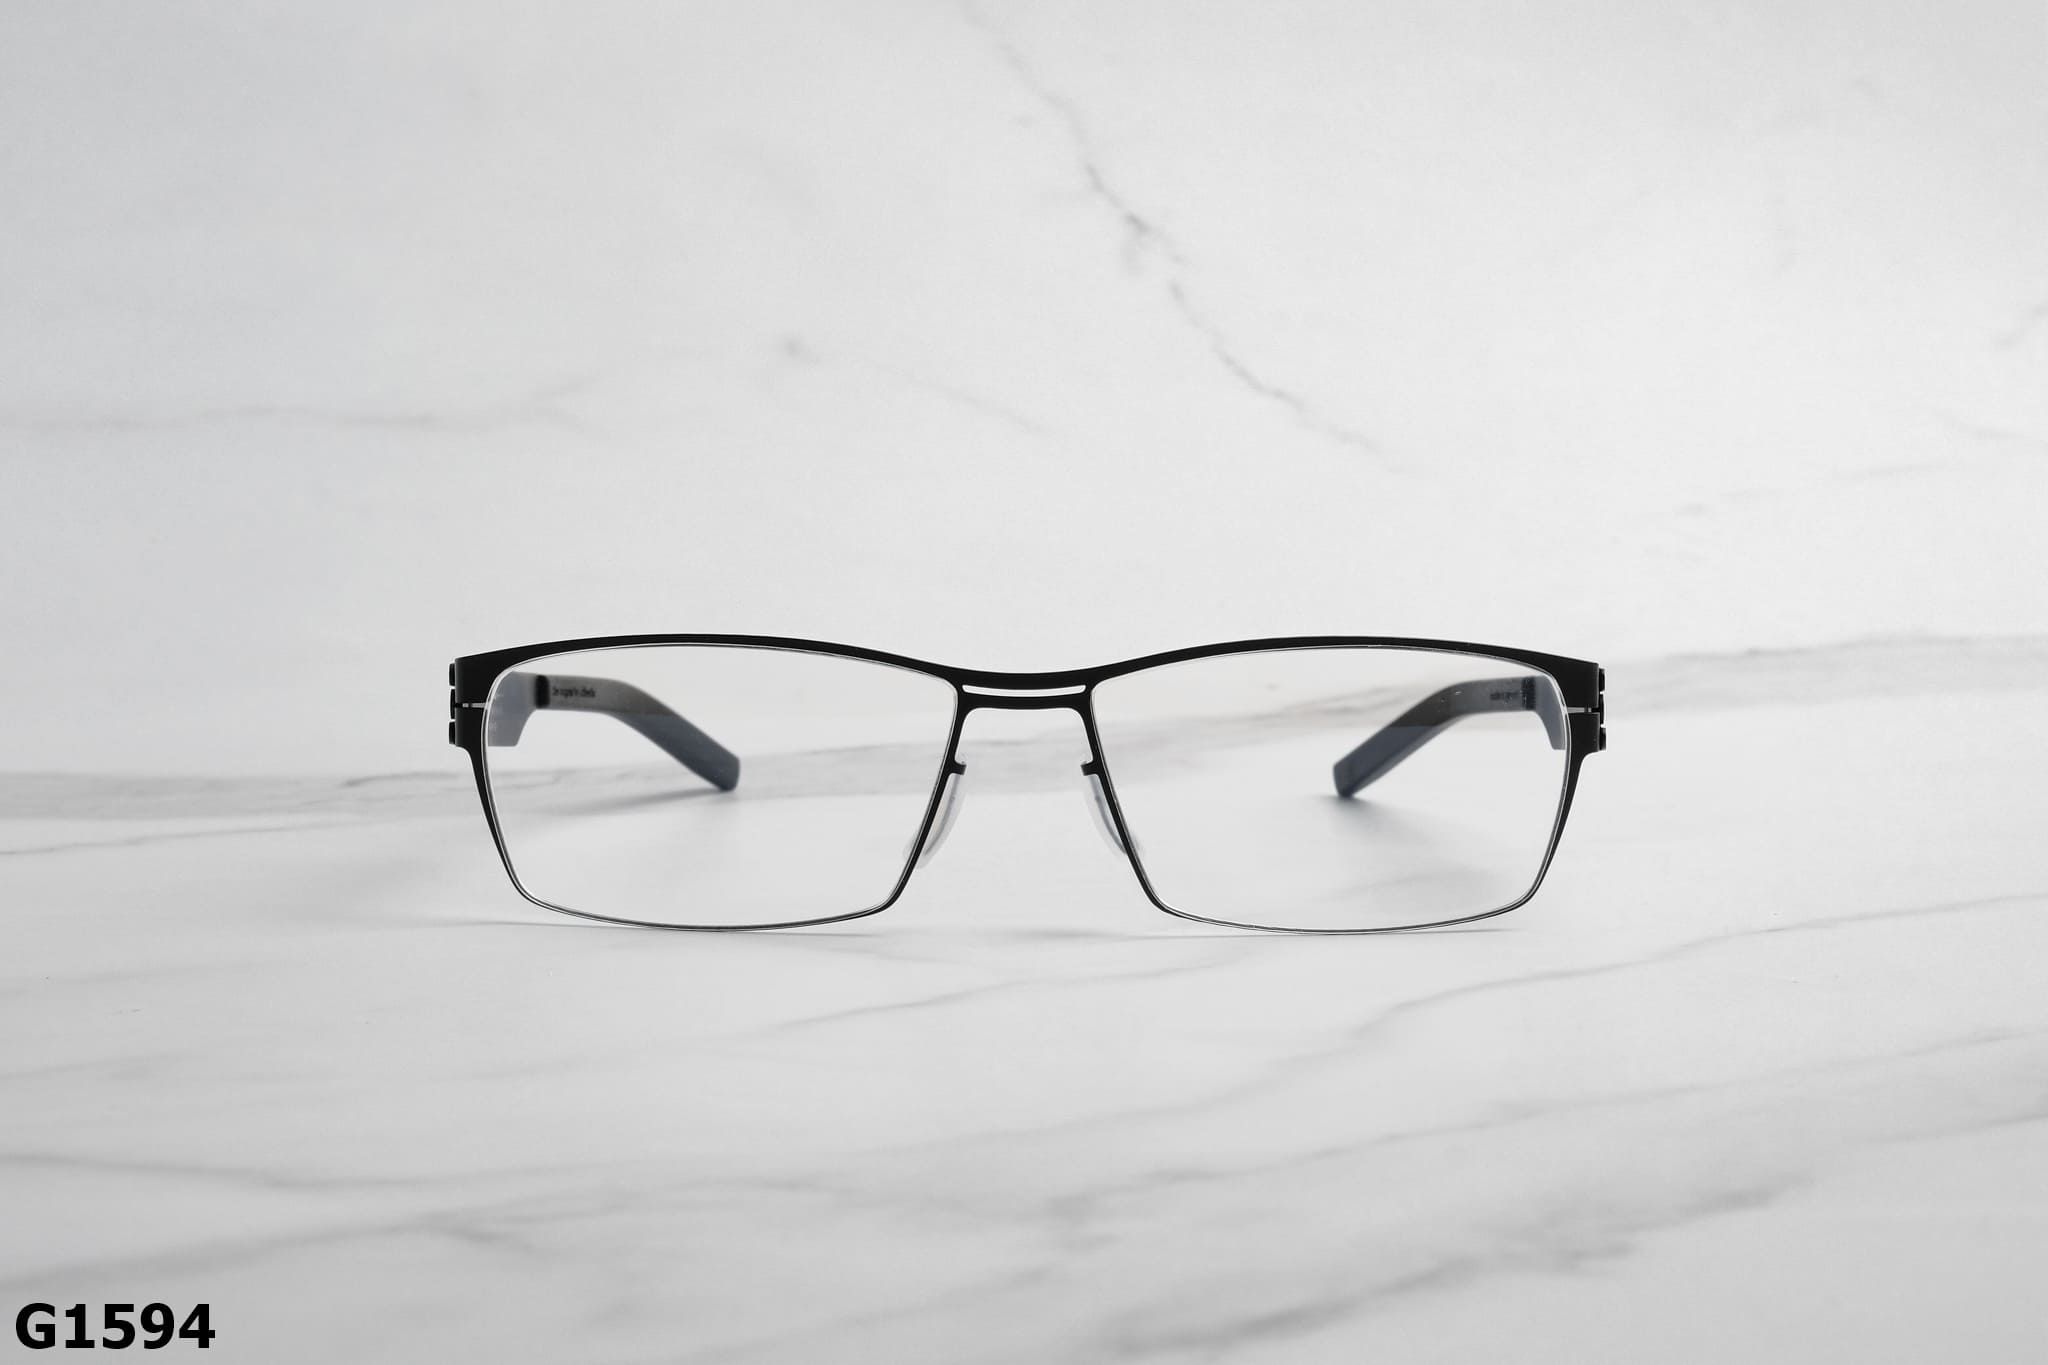  IC Eyewear - Glasses - G1594 